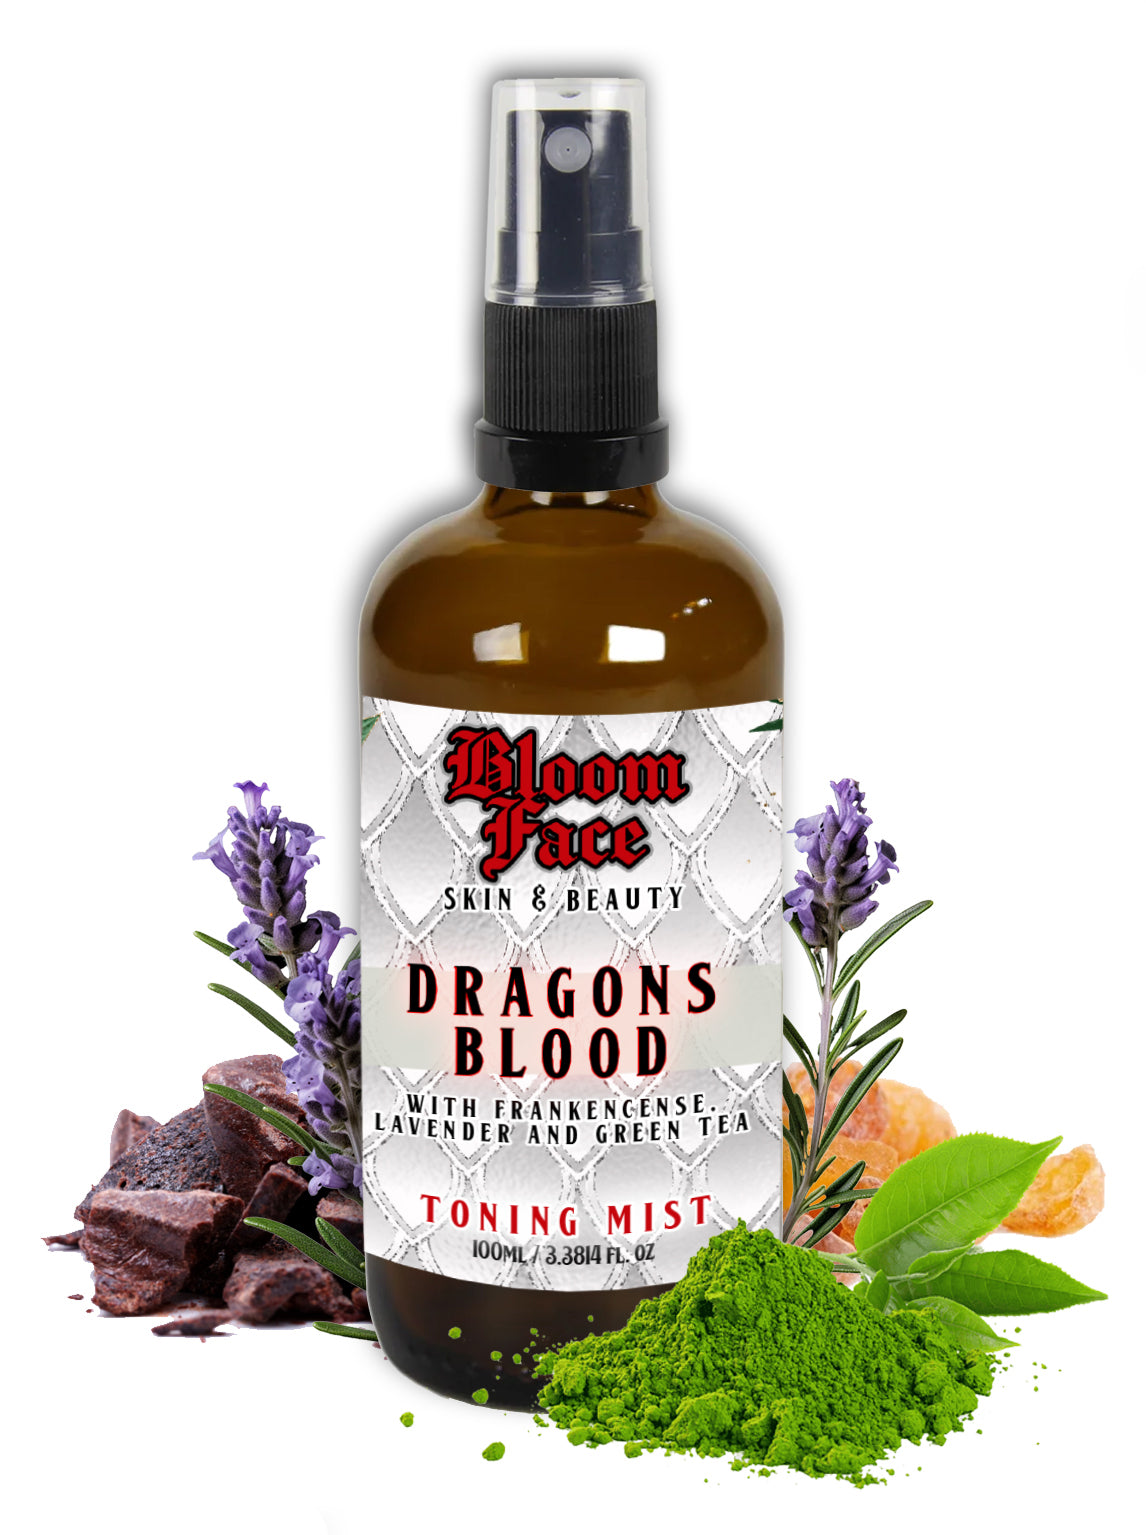 DRAGONS BLOOD - Toning Mist with Frankencense, Lavender and Green Tea